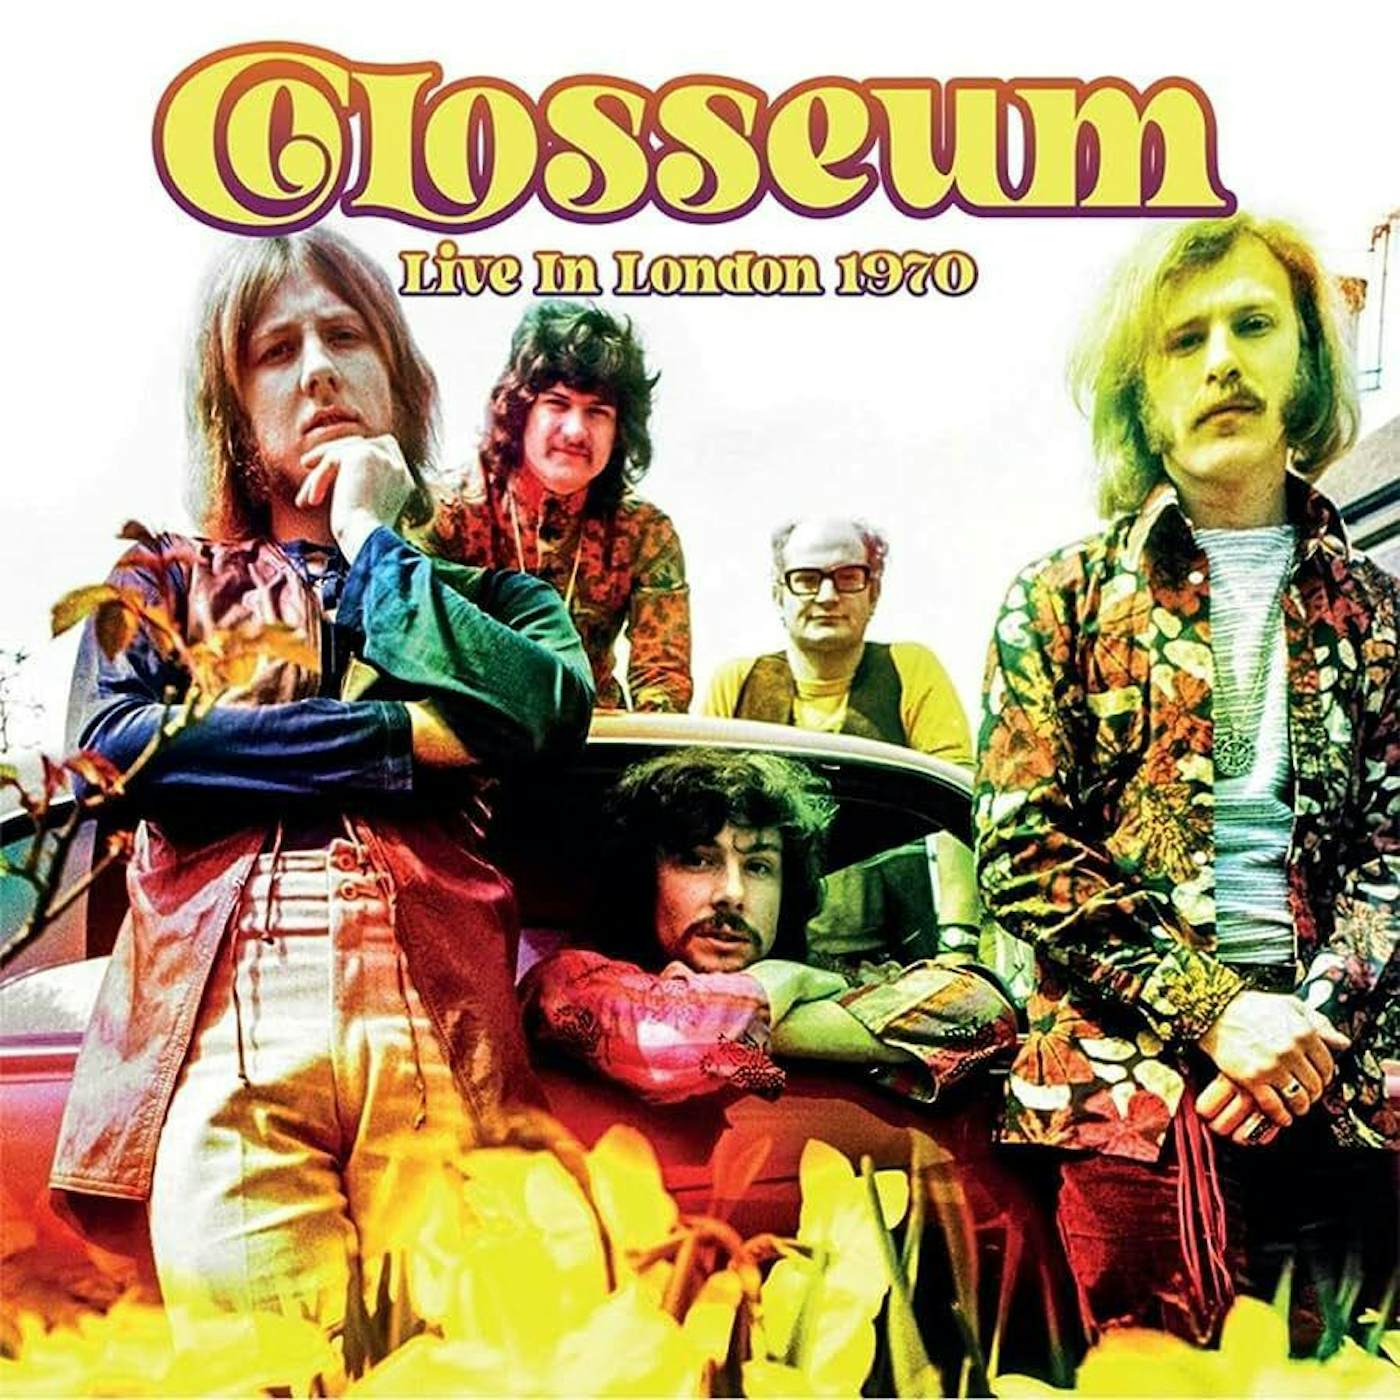 Colosseum Live In London 1970 (2LP/White) Vinyl Record